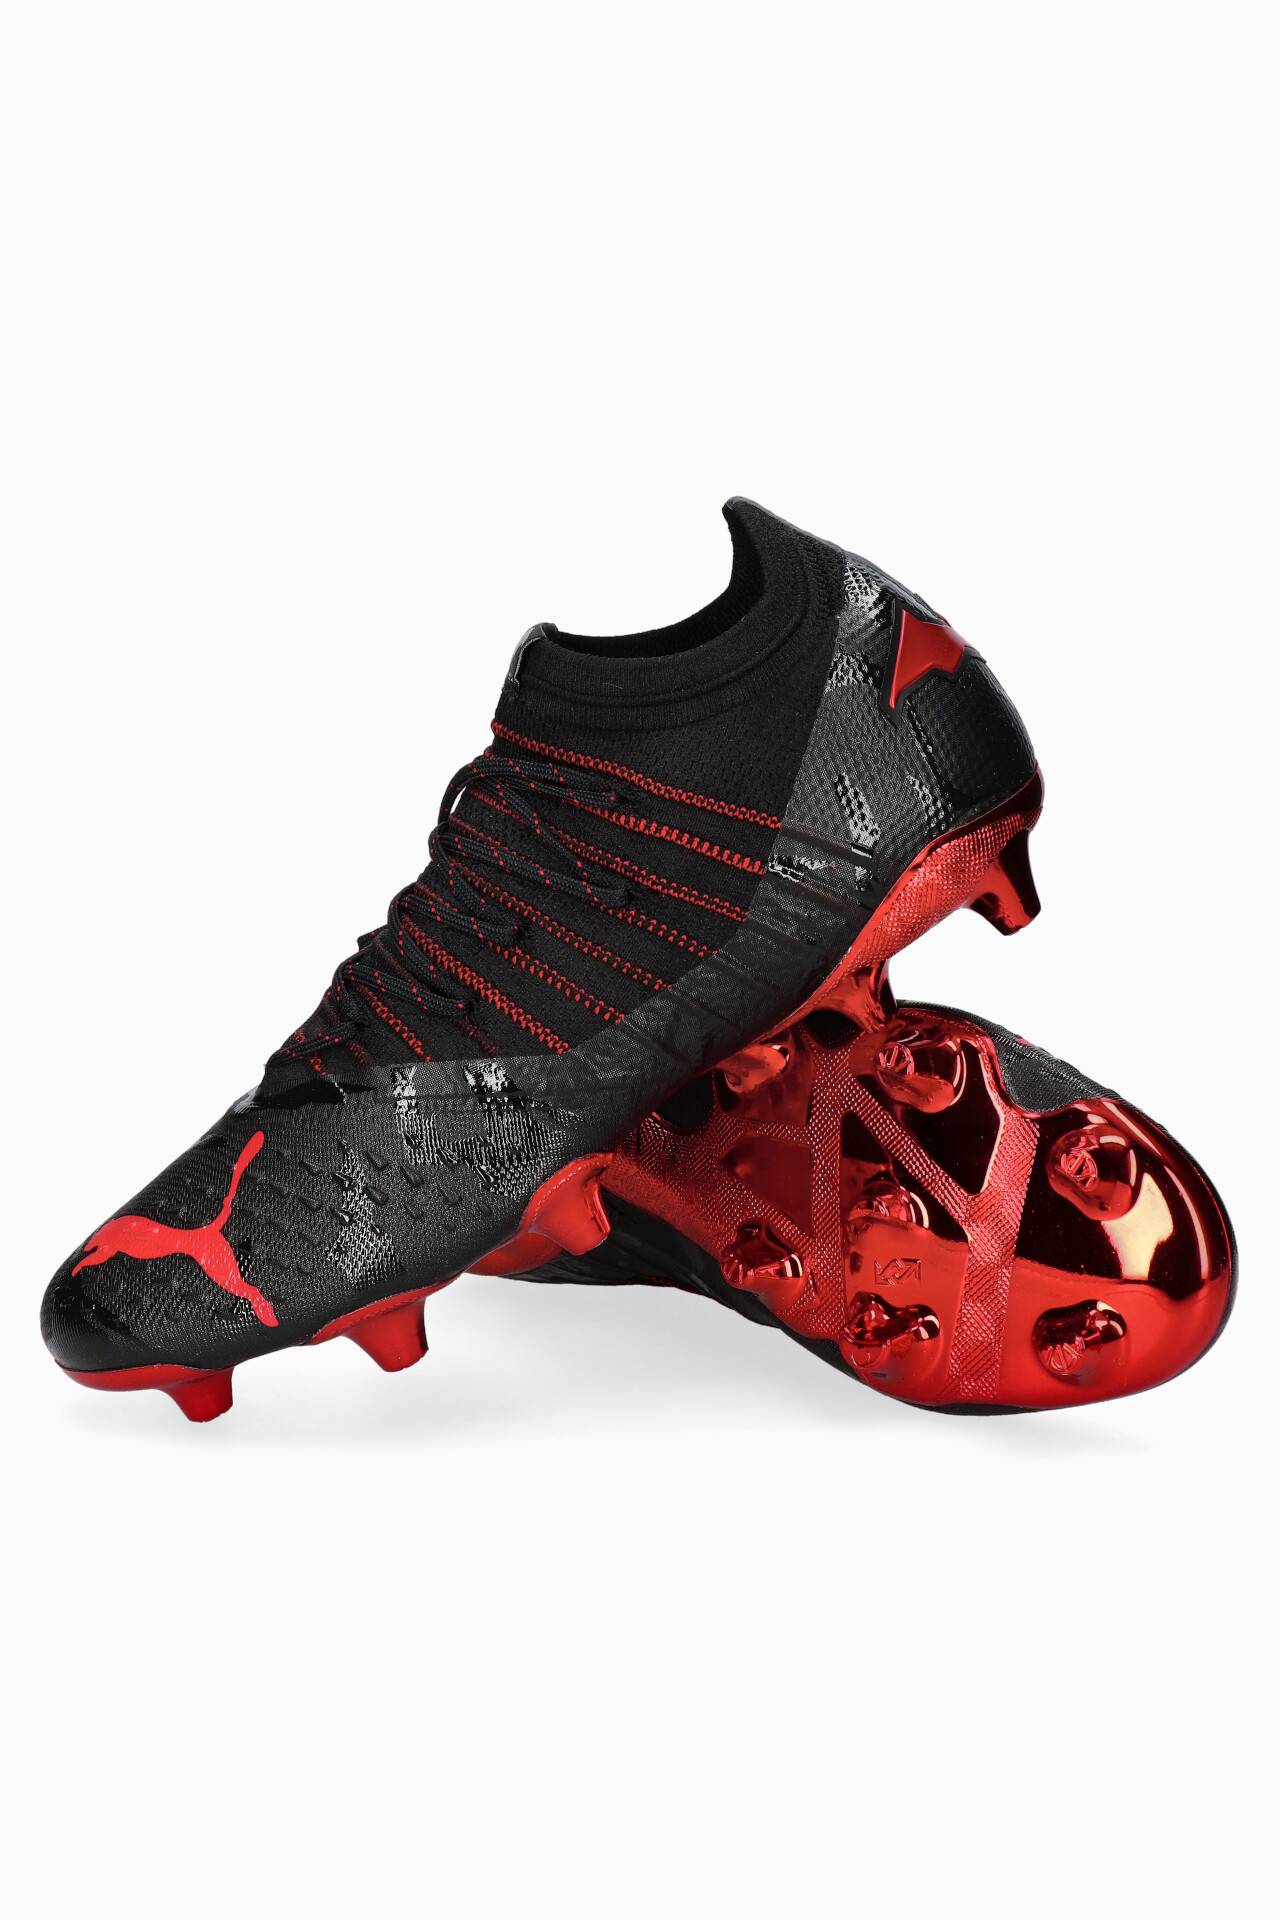 Cleats Puma x Batman Future Z  FG/AG  - Football boots &  equipment